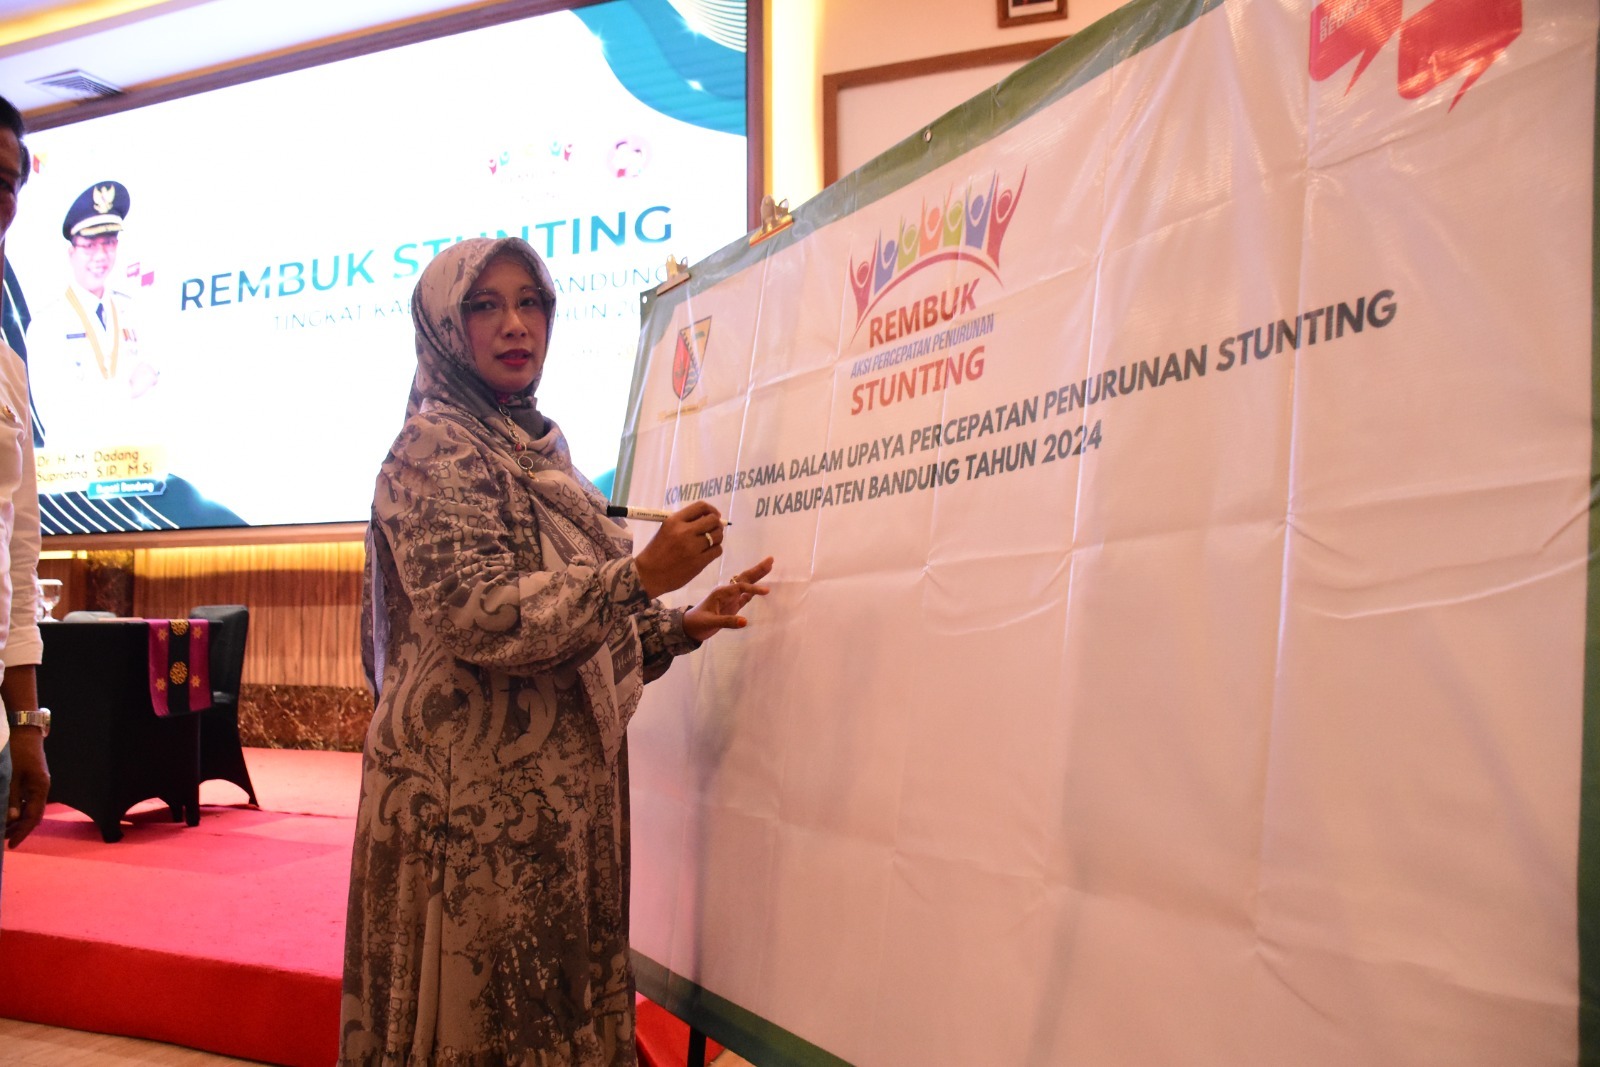 Pemkab Bandung Gelar Forum Rembug Stunting, Targetkan Angka Prevalensi 17,81% Tahun 2024